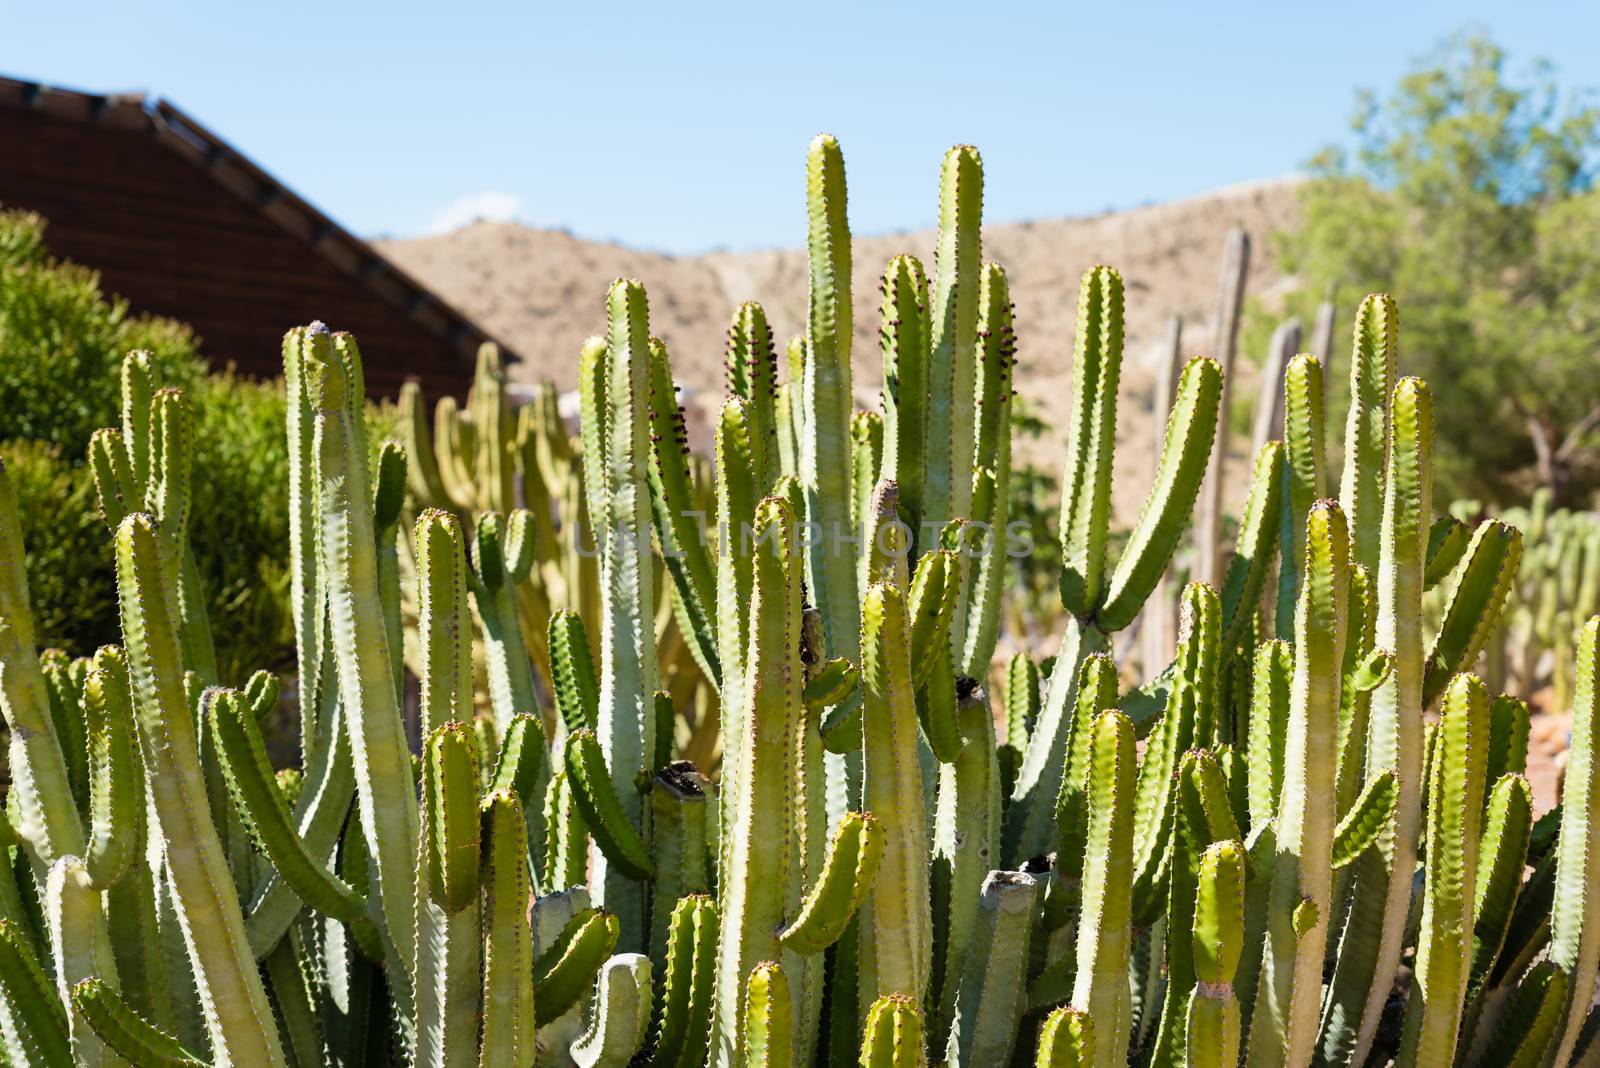 Cactus landscape. Cultivation of cacti. Cactus field. Garden of flower